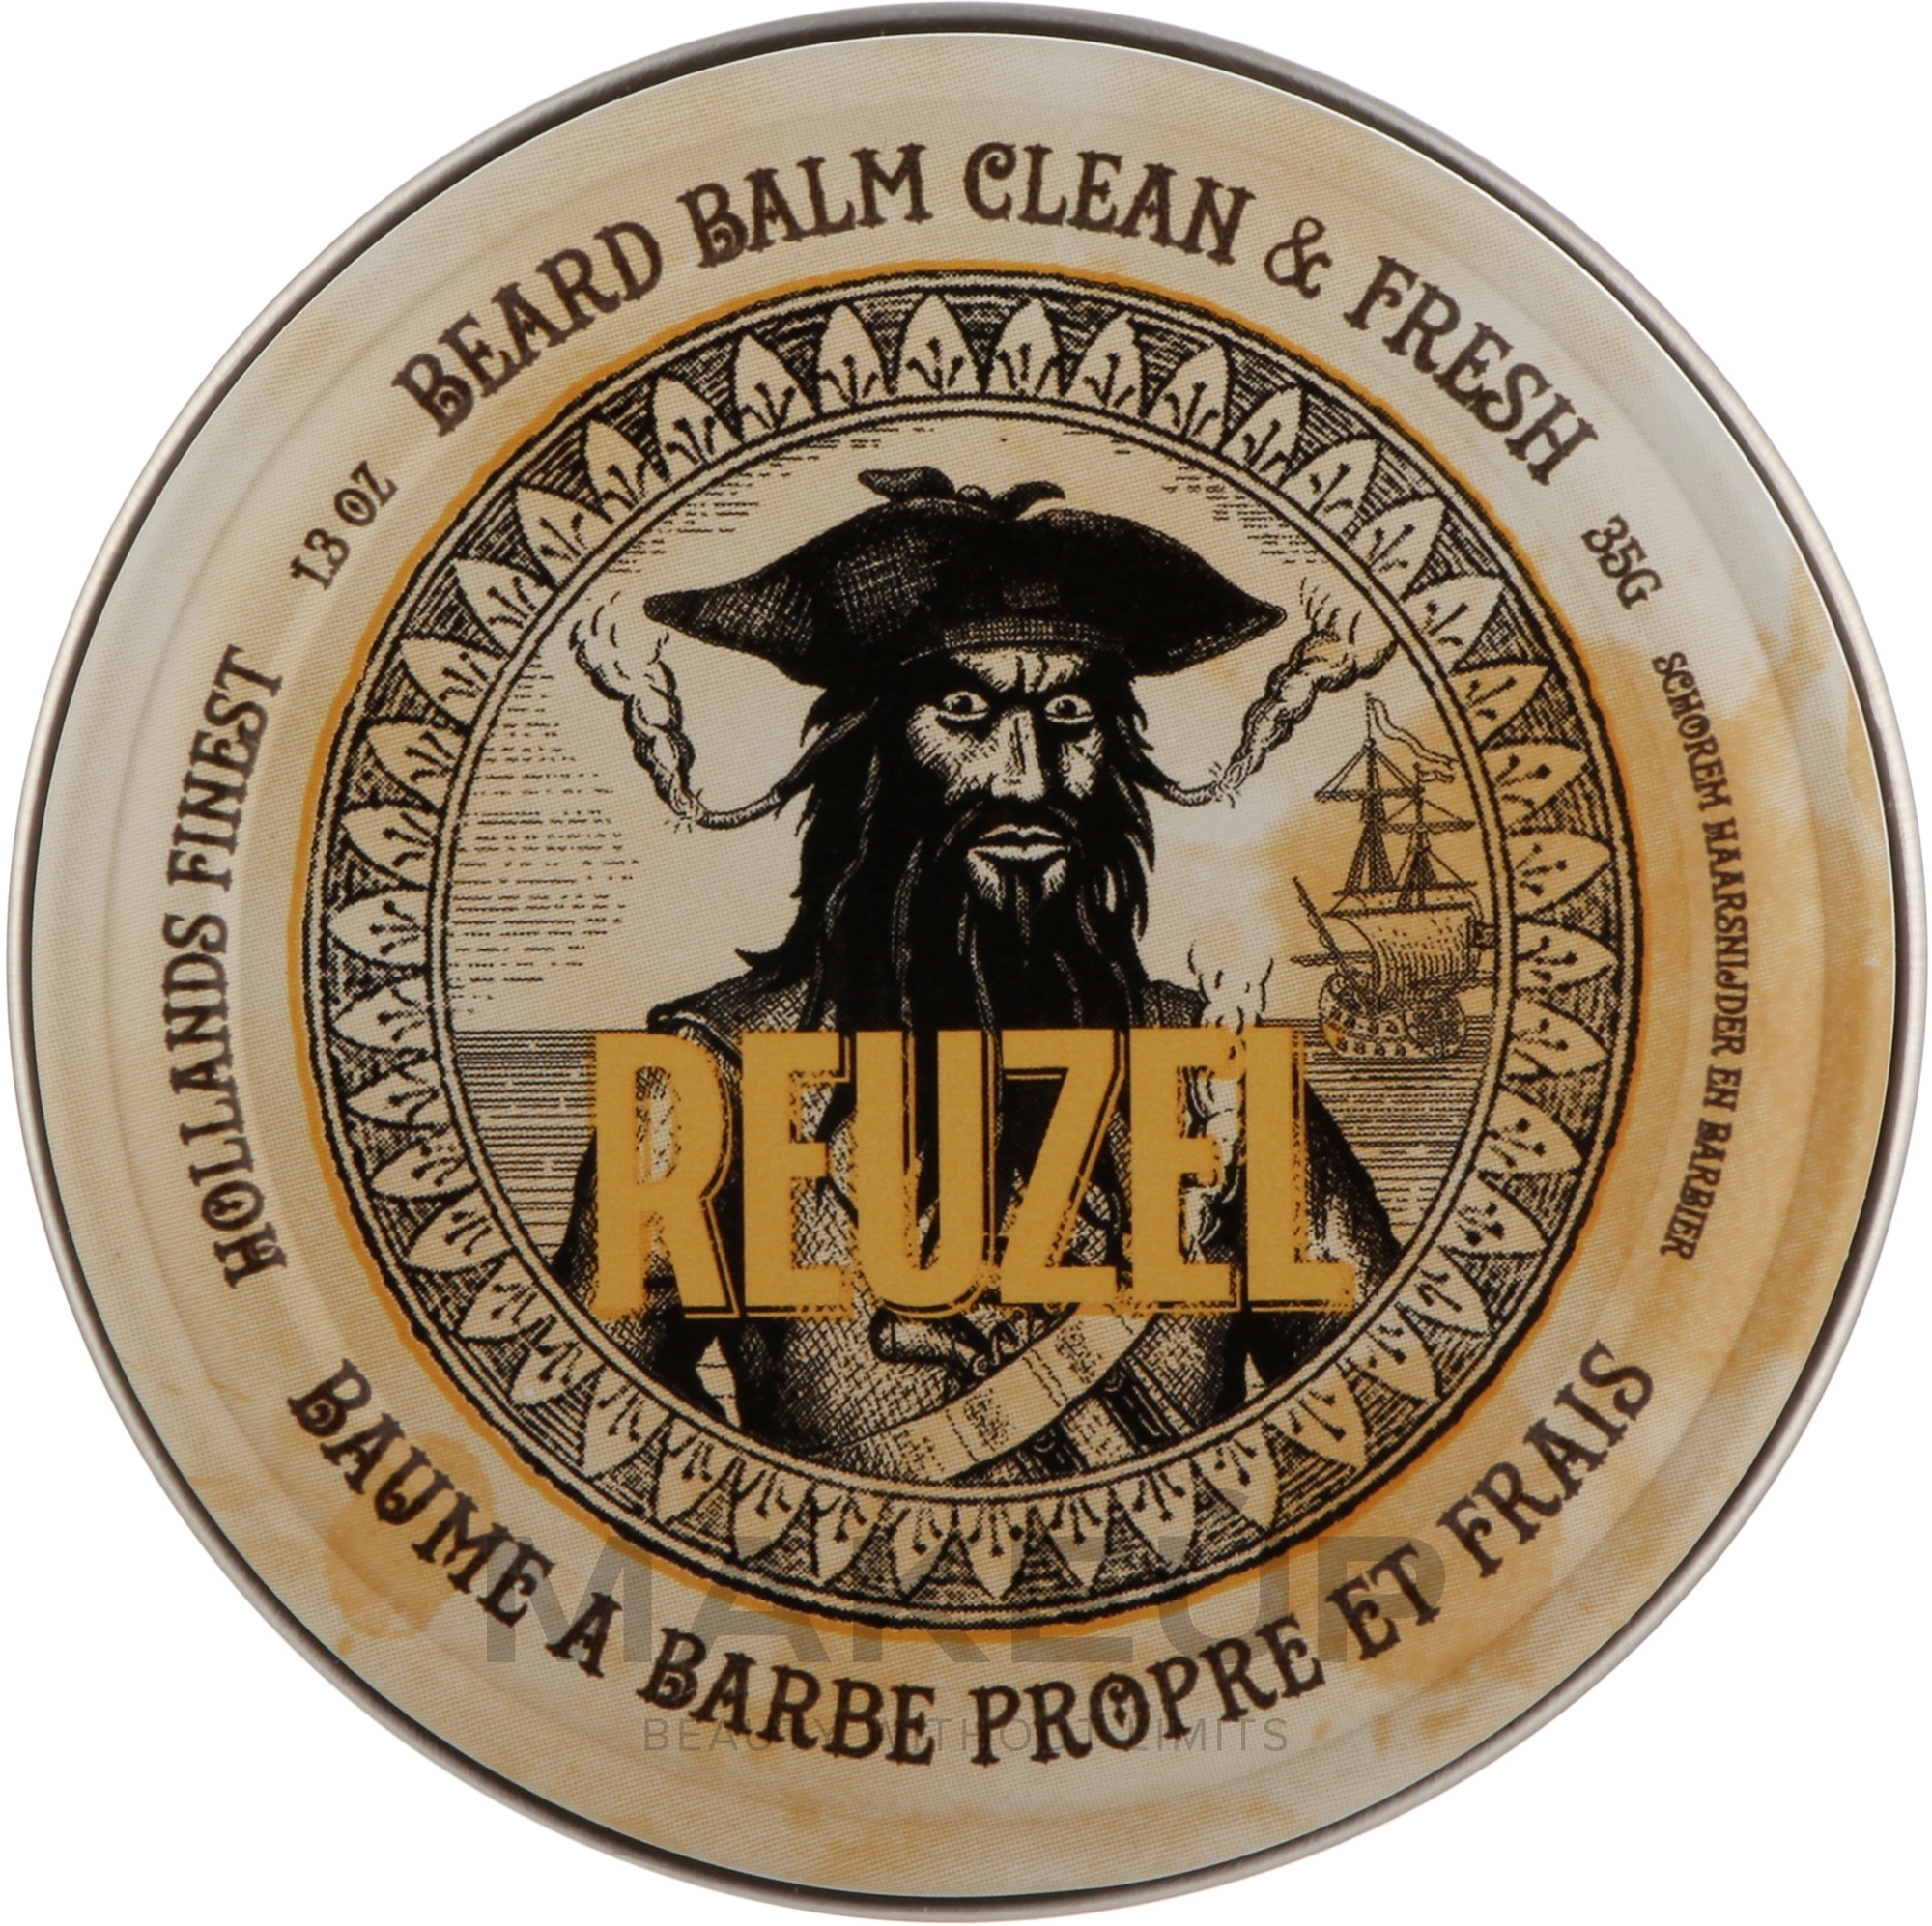 Мужской бальзам для бороды - Reuzel Beard Balm Clean & Fresh — фото 35g